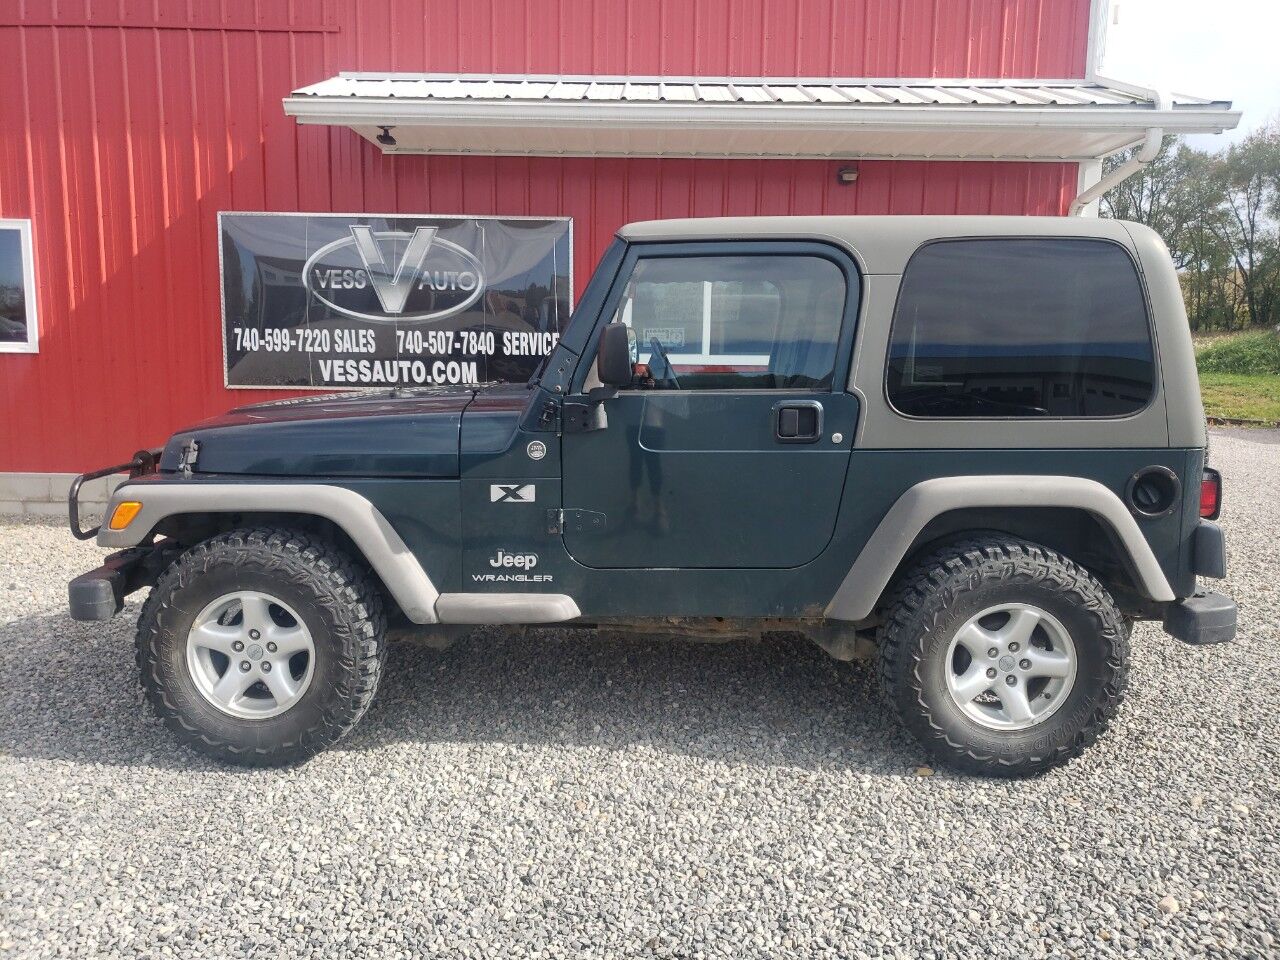 Jeep Wrangler For Sale In Danville, OH ®